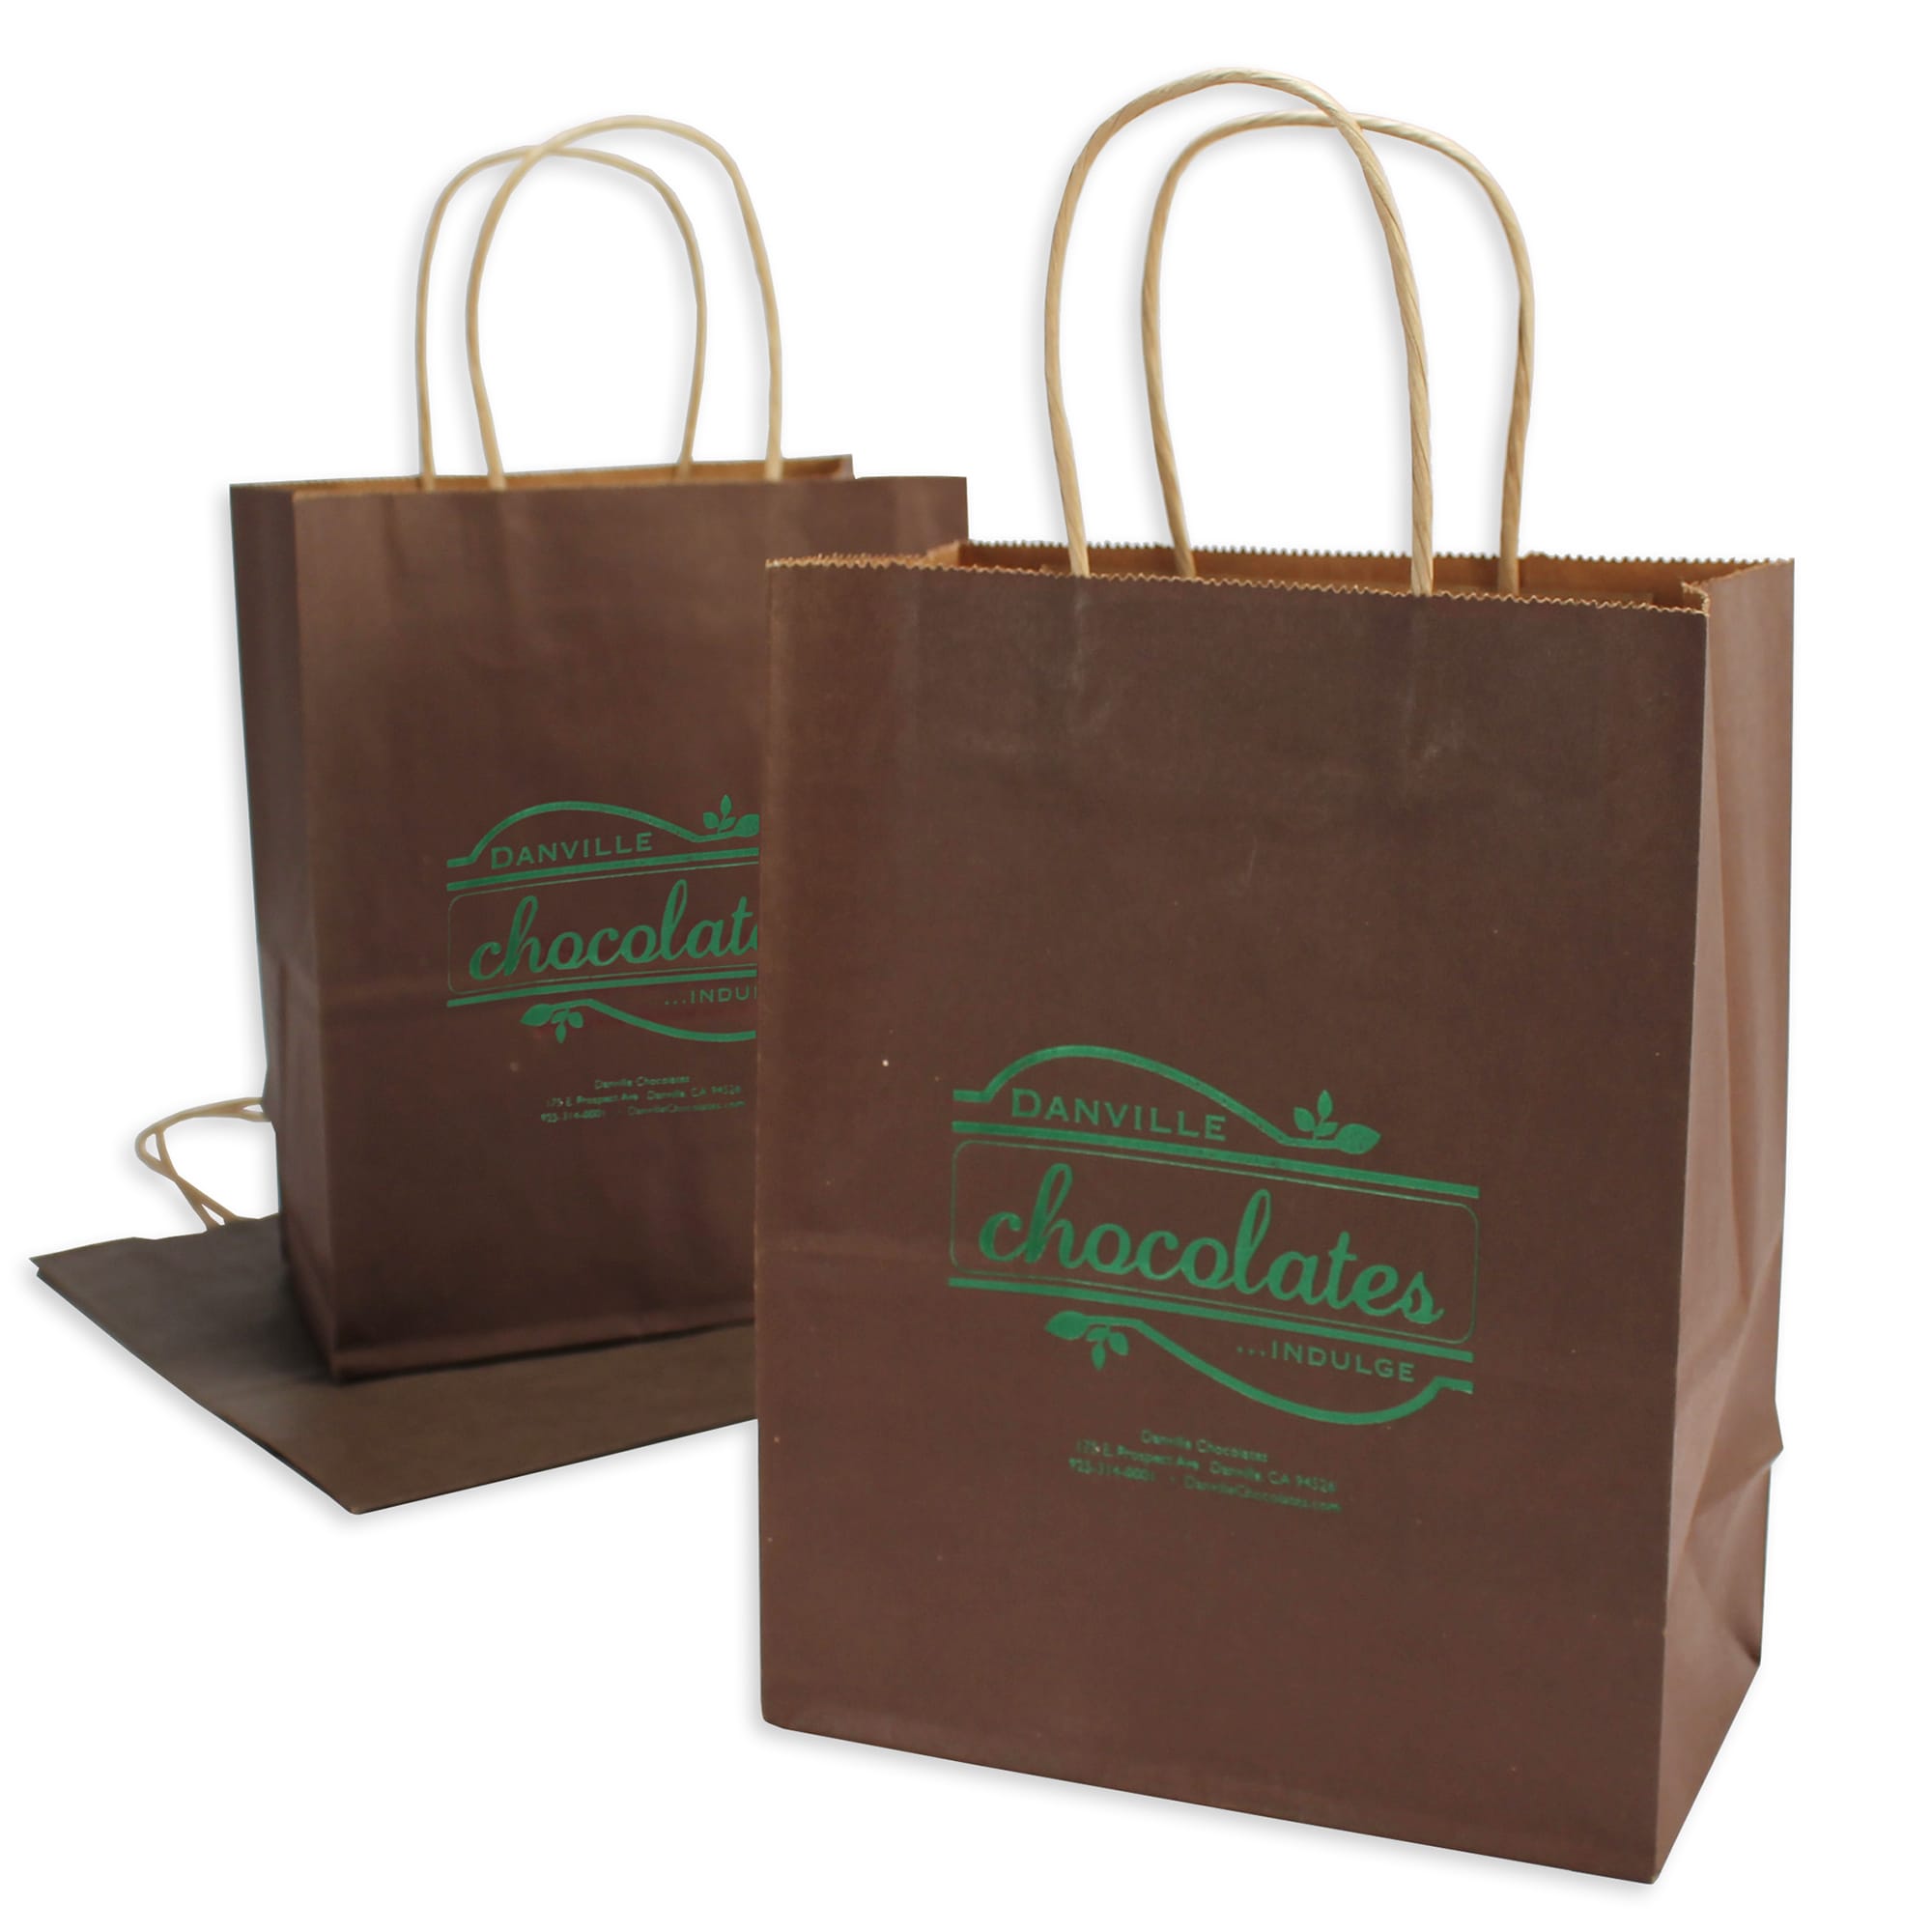 NEW IN: Envelope bag 💛 Inclusions: paper bag, dust bag, care card